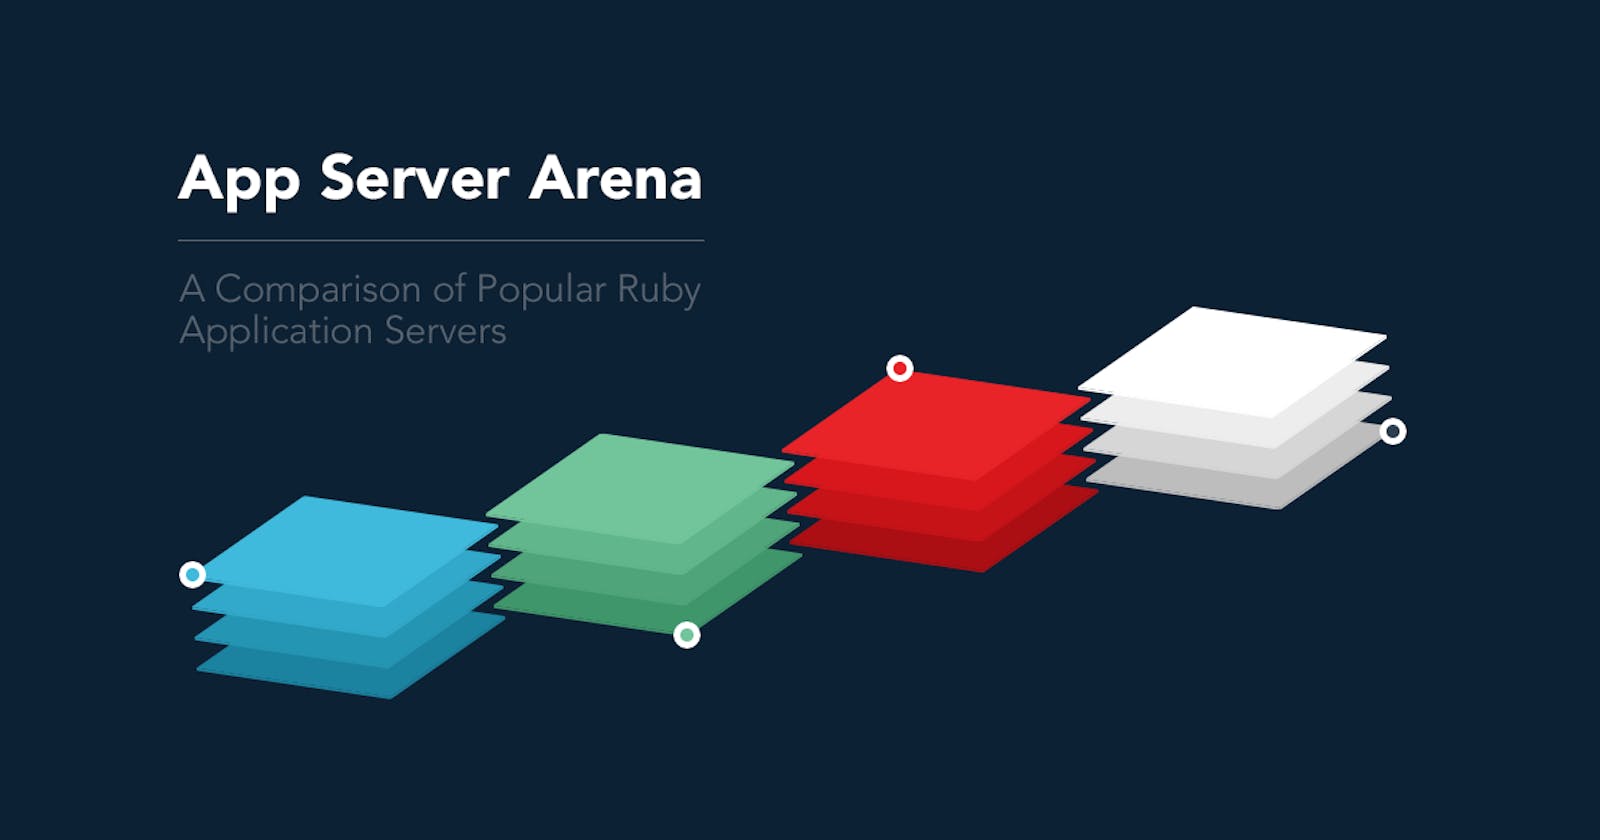 App Server Arena: A Comparison of Popular Ruby Application Servers